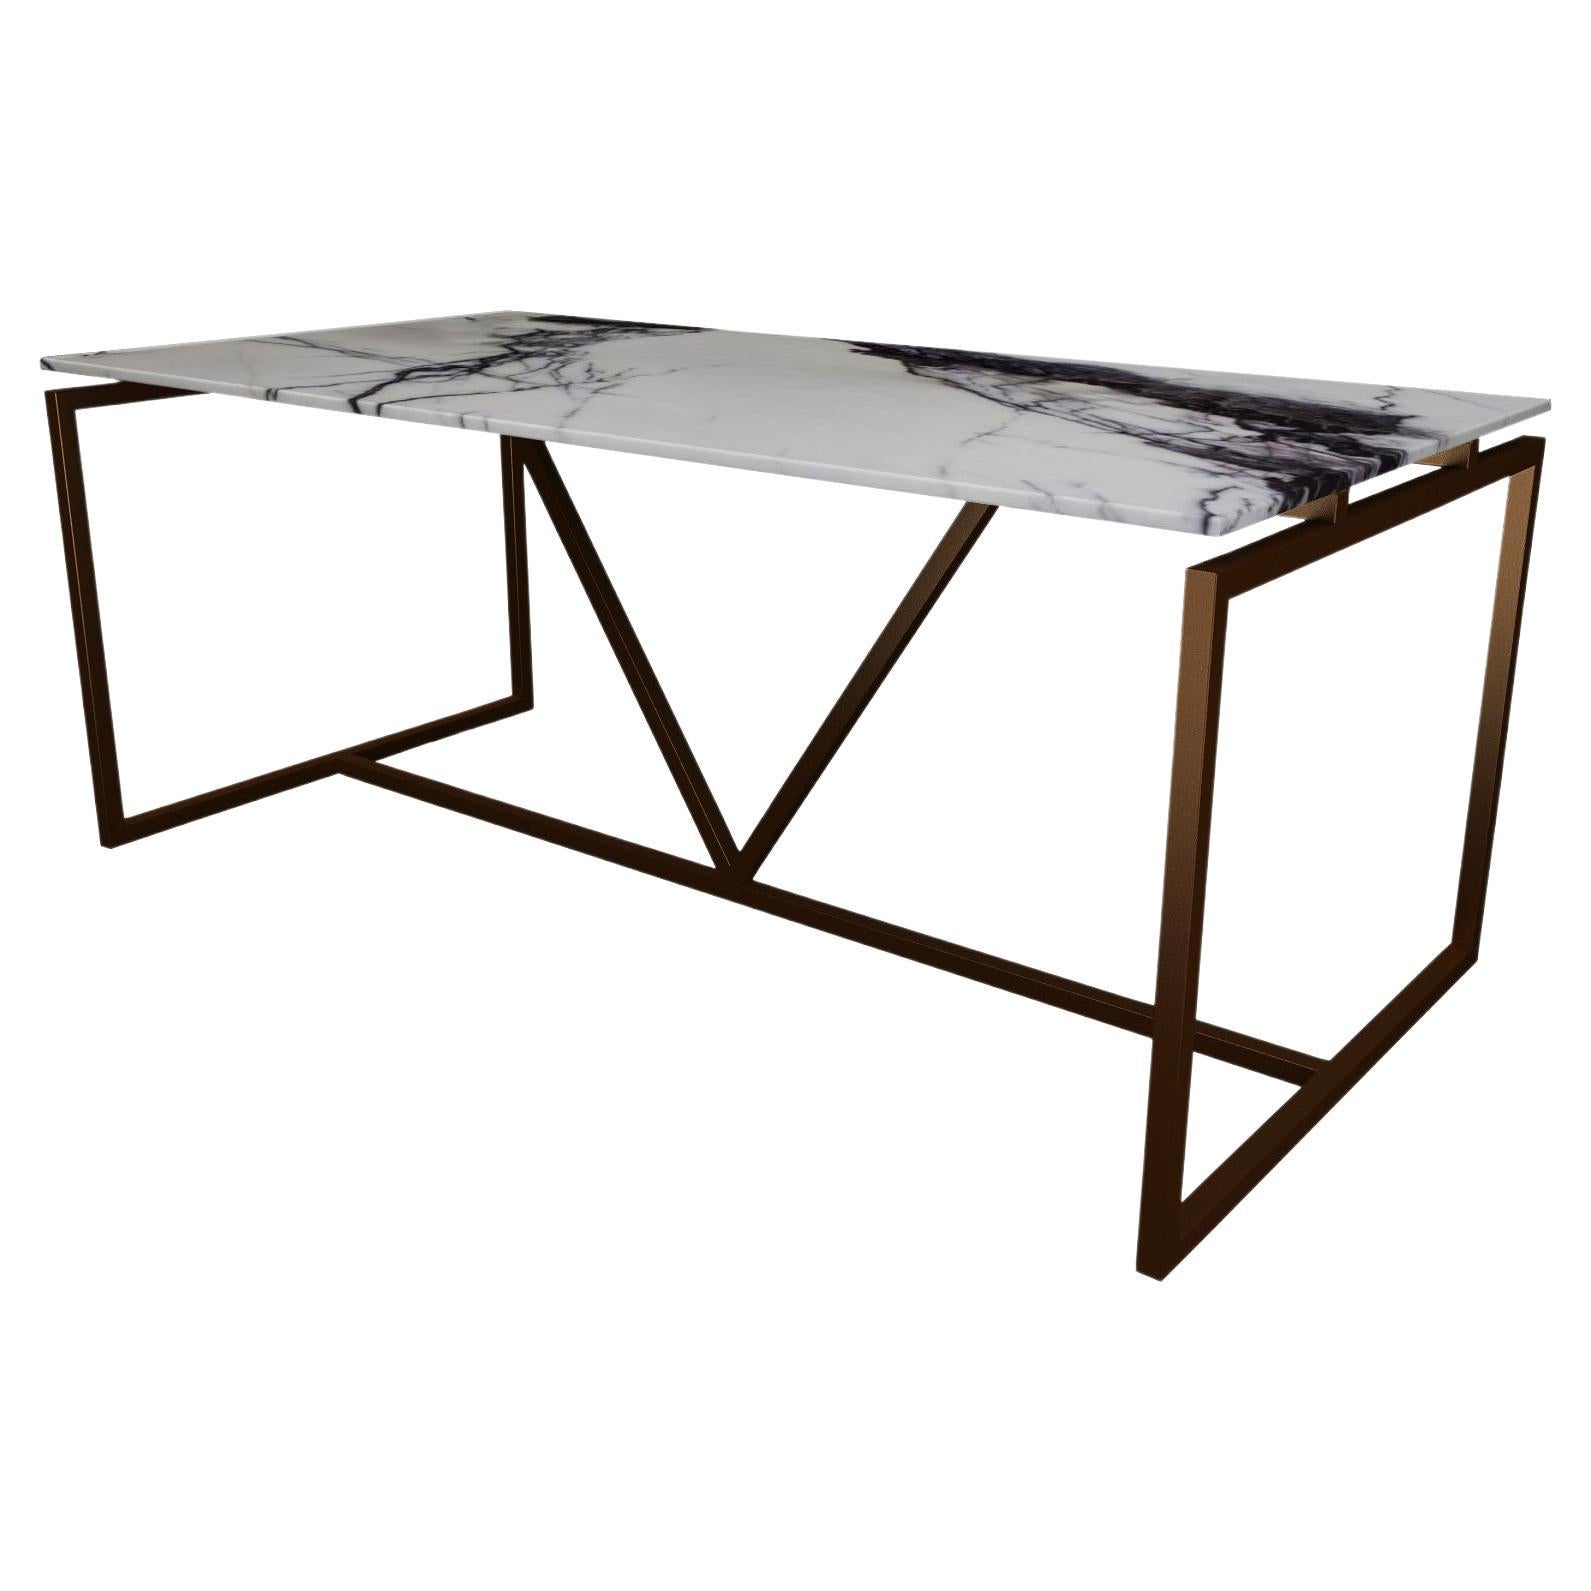 NORDST OLIVIA Dining Table, Italian White Mountain Marble, Danish Modern Design For Sale